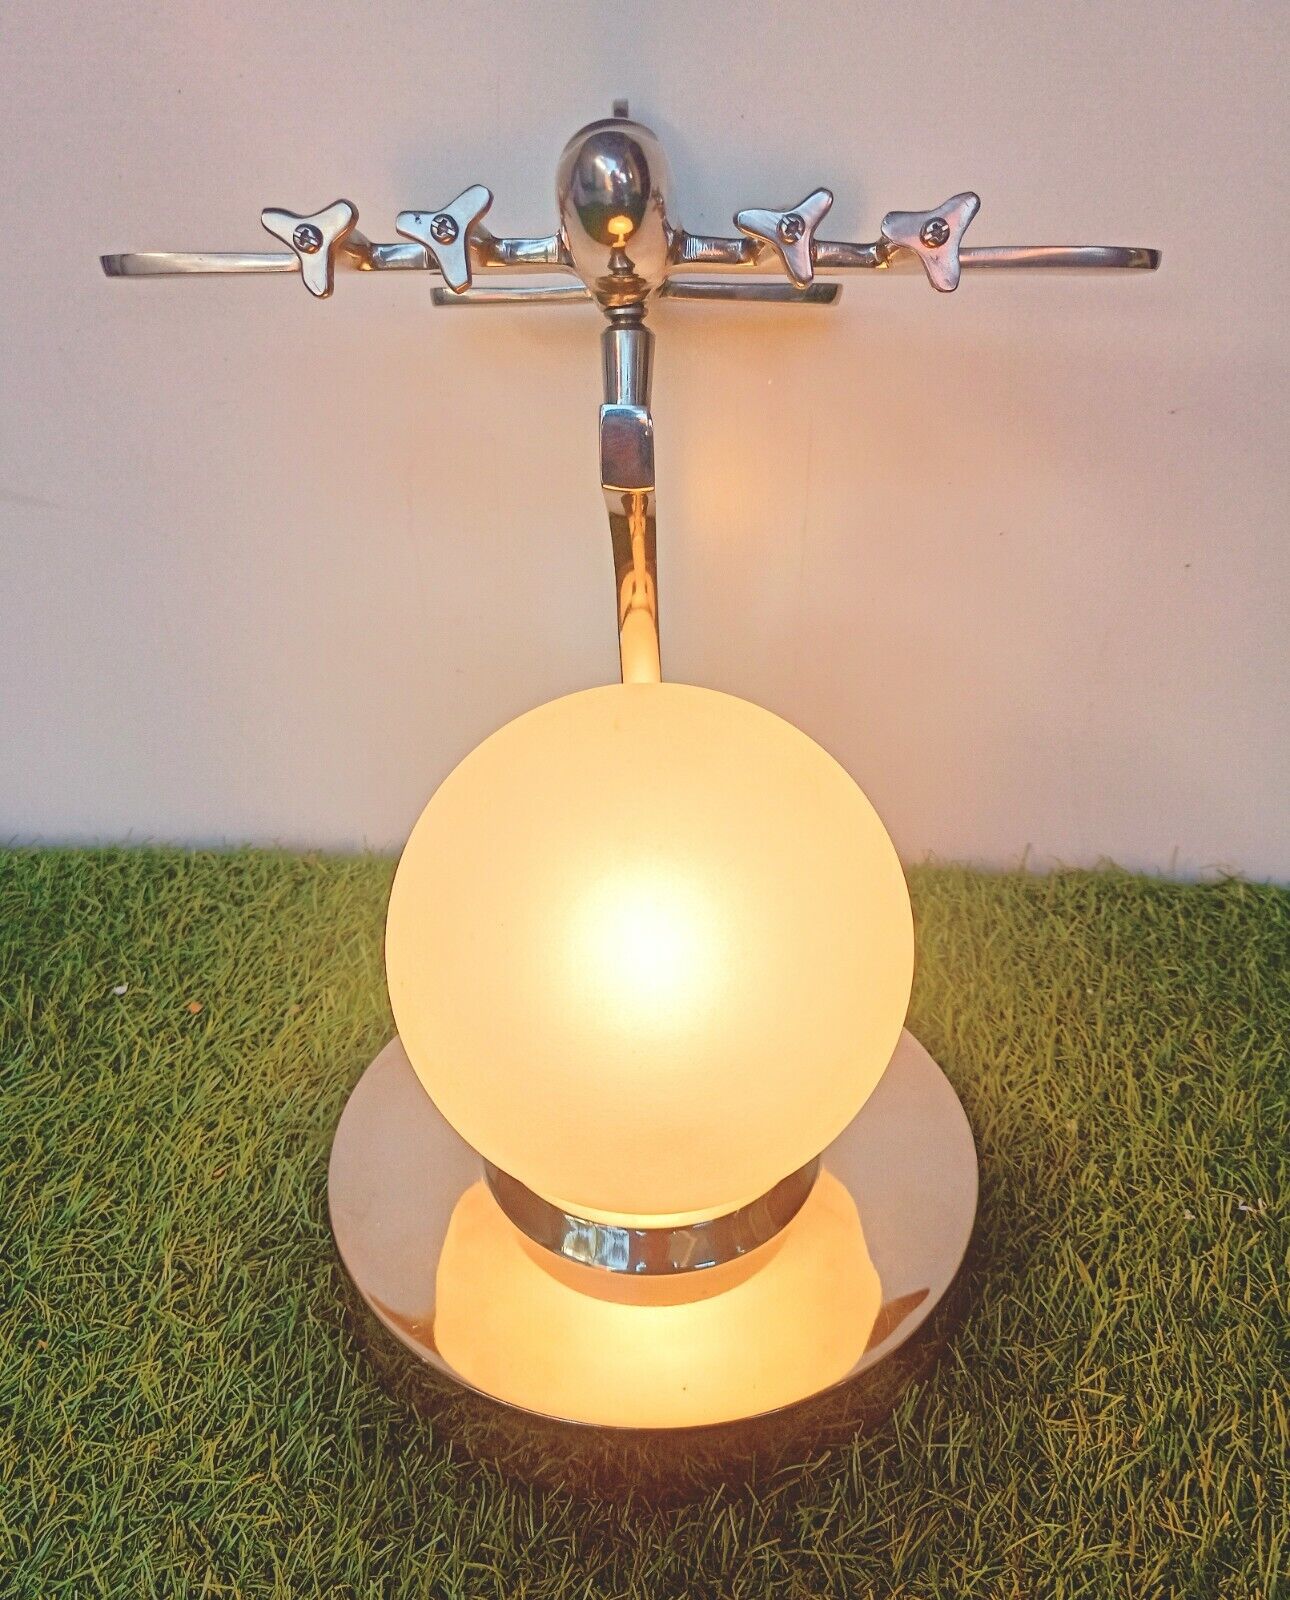 Aircraft Plane Model Globe Silver Desk Lamp Home Décor Decorative Table Lighting